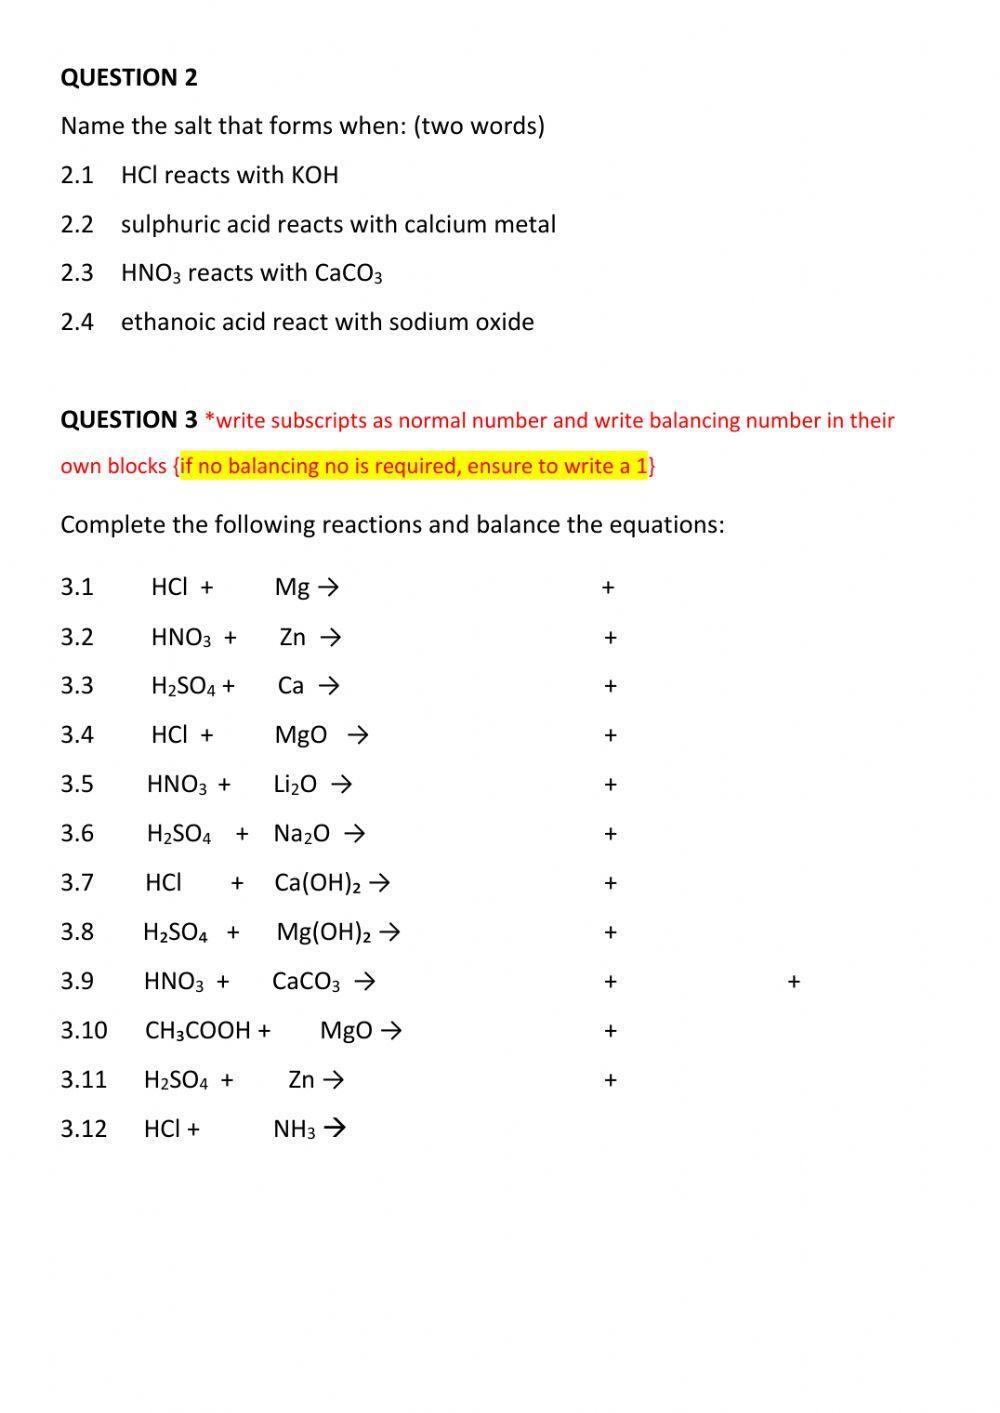 Acids and bases worksheet 1